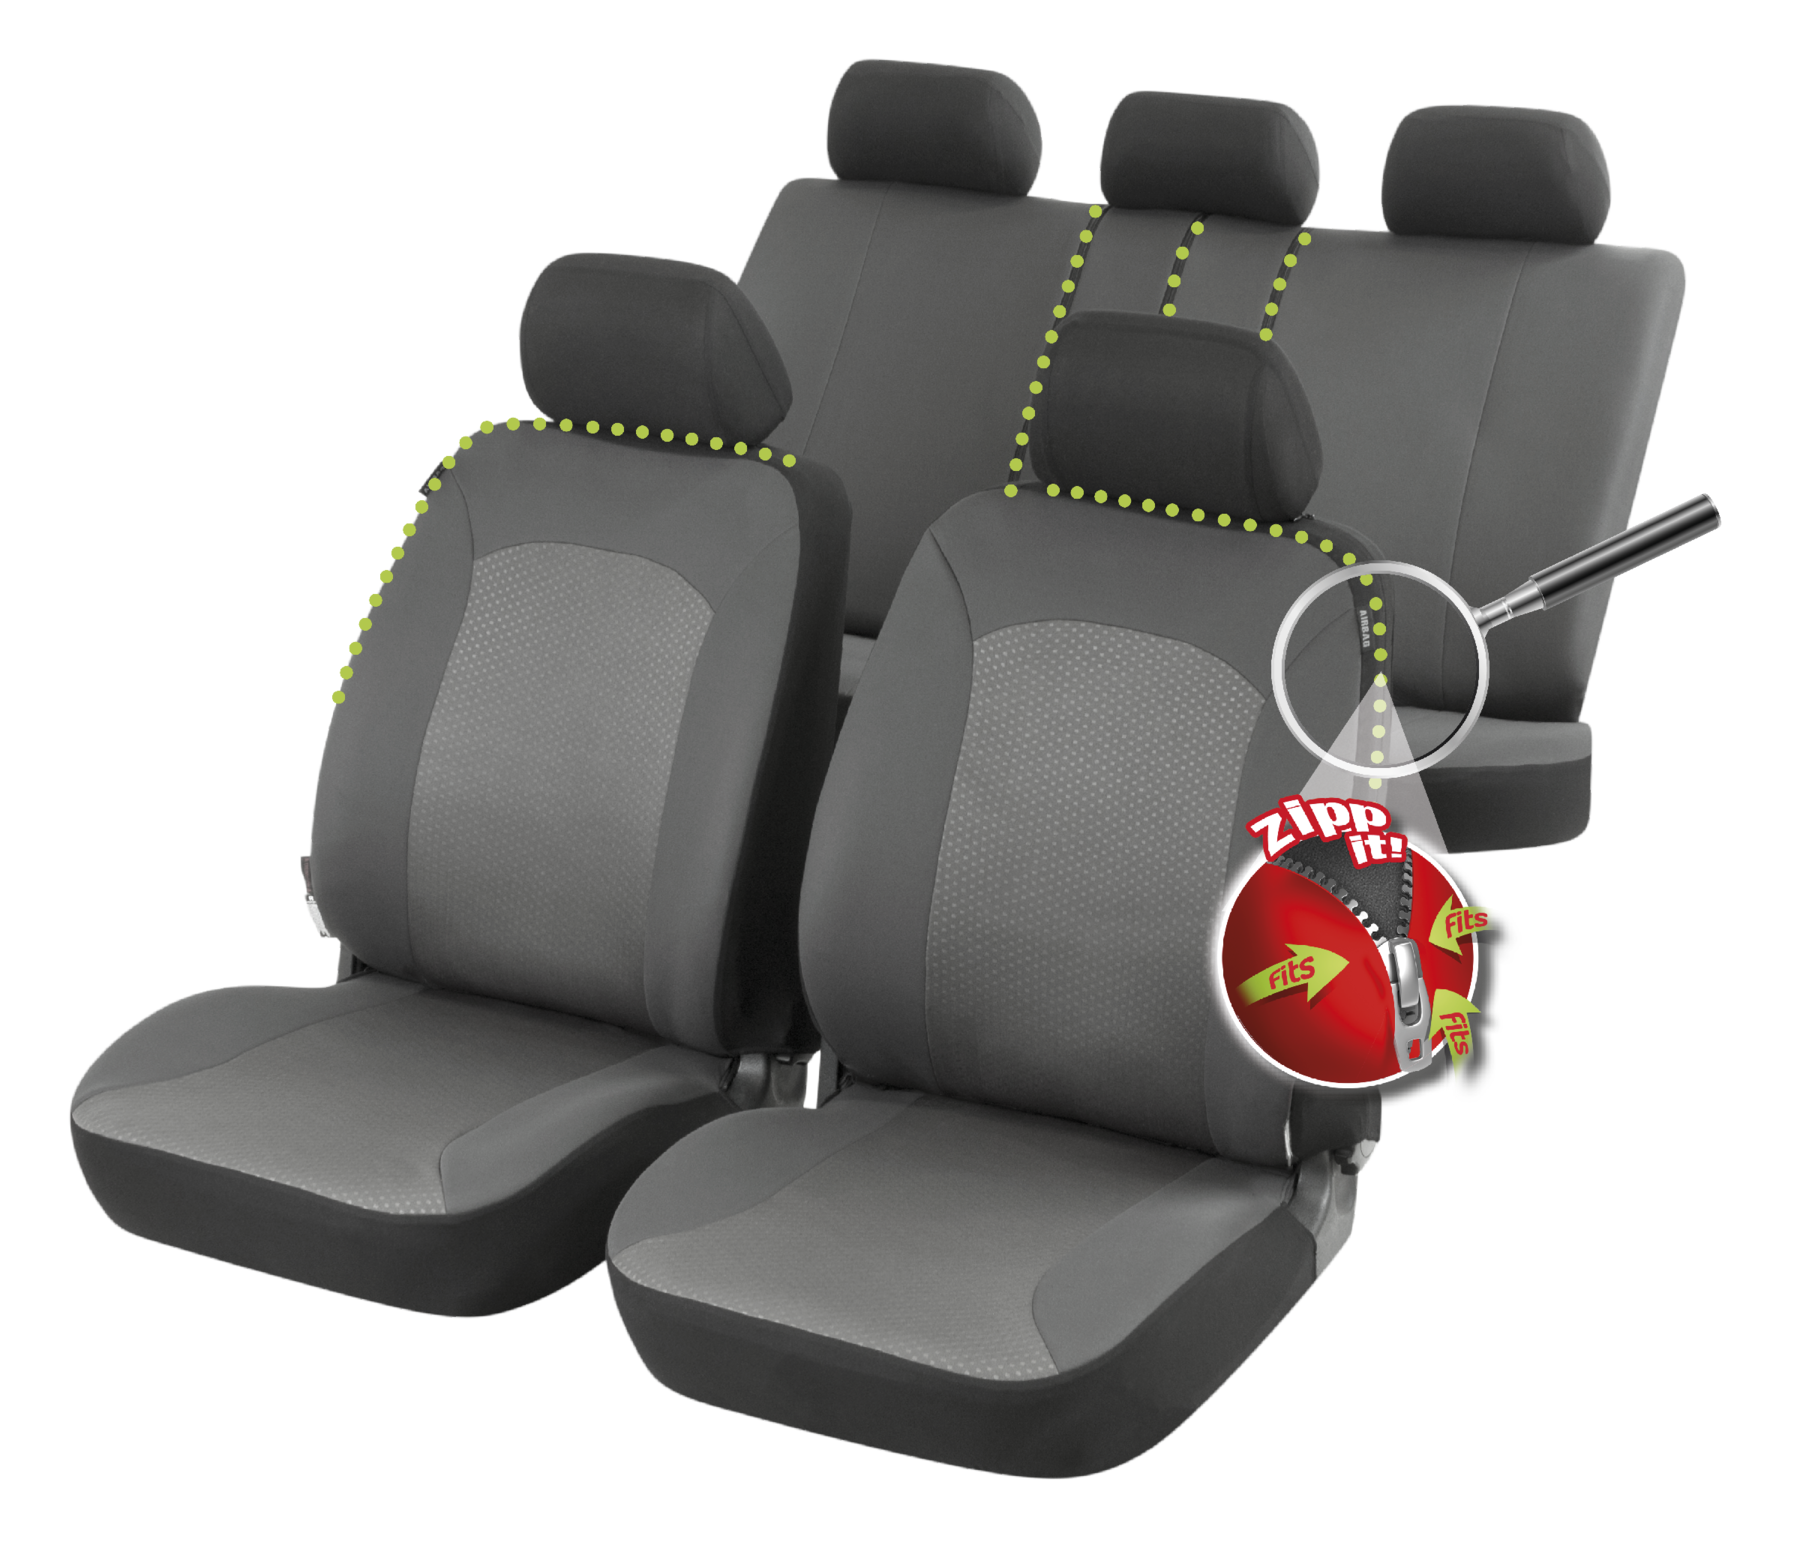 ZIPP IT Premium Manhay car Seat covers complete set with zipper system